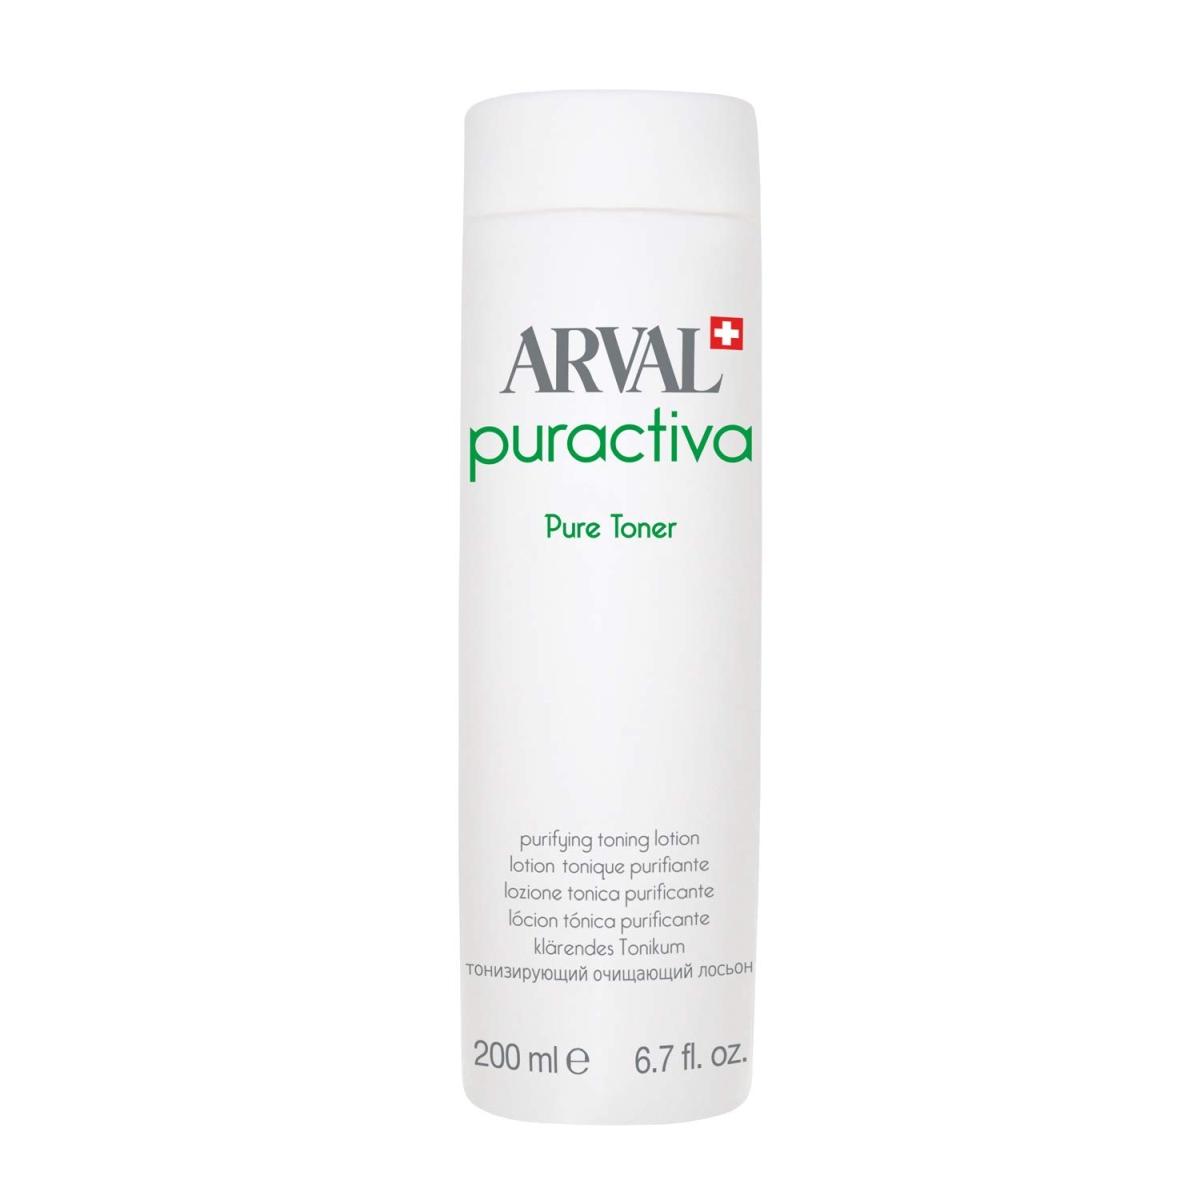 Puractiva pure toner fl. 200 ml